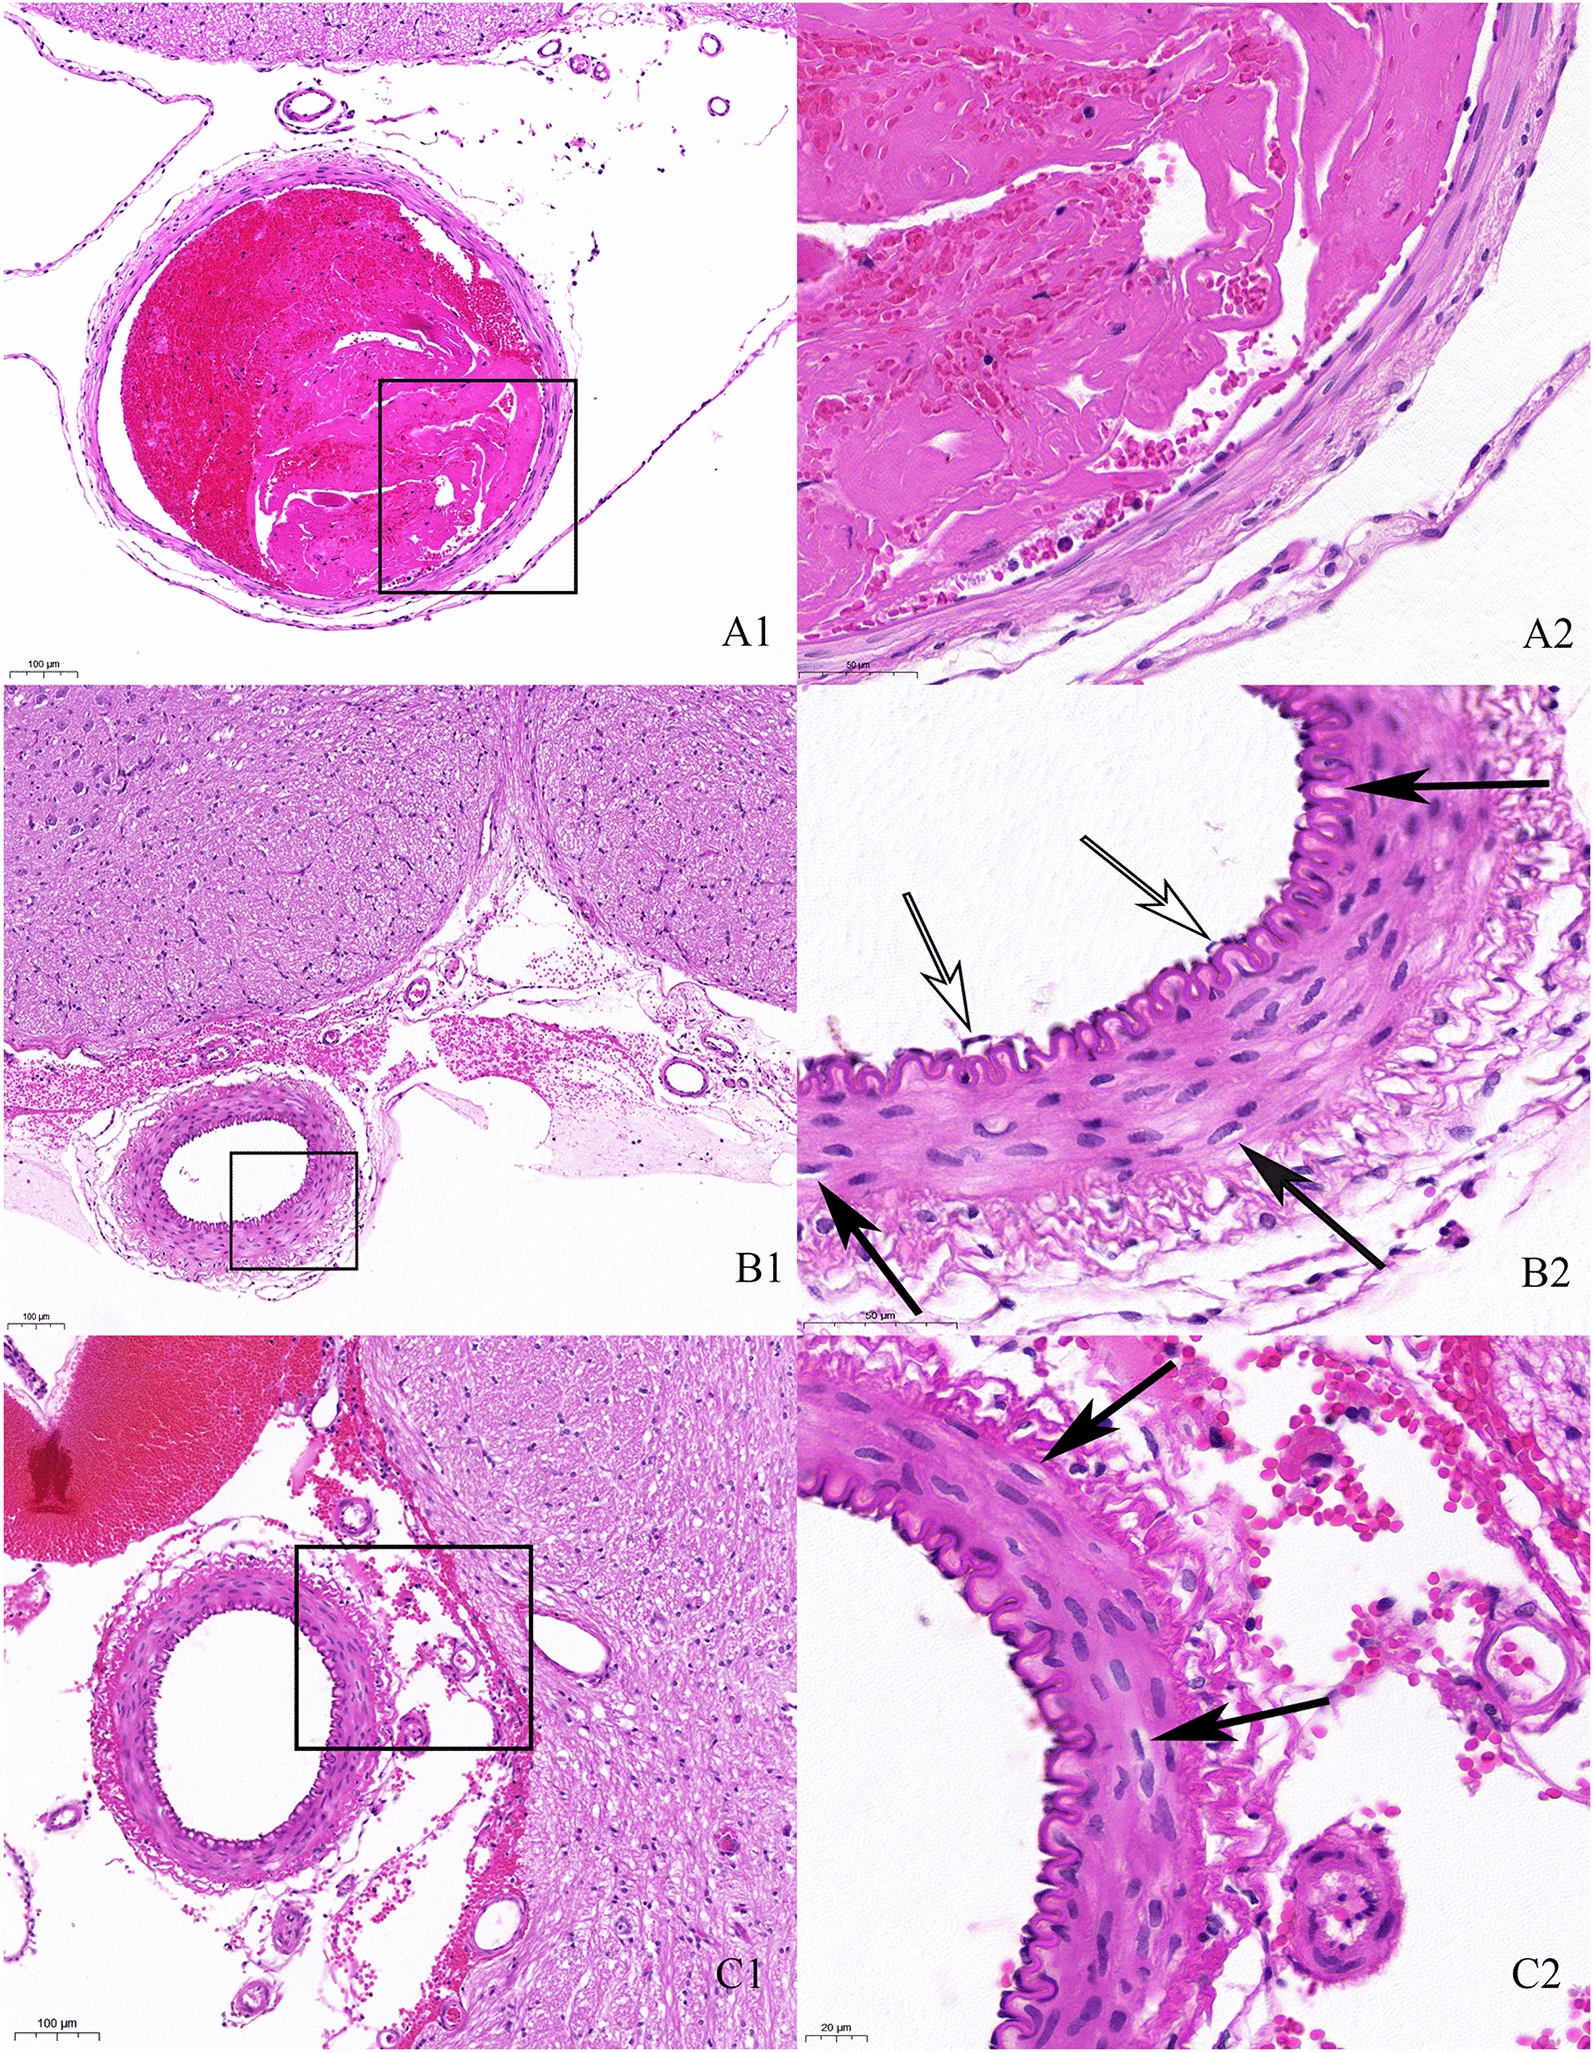 The Impact of Enteral Nimodipine on Endothelial Cell Apoptosis in an Animal Subarachnoid Hemorrhage Model